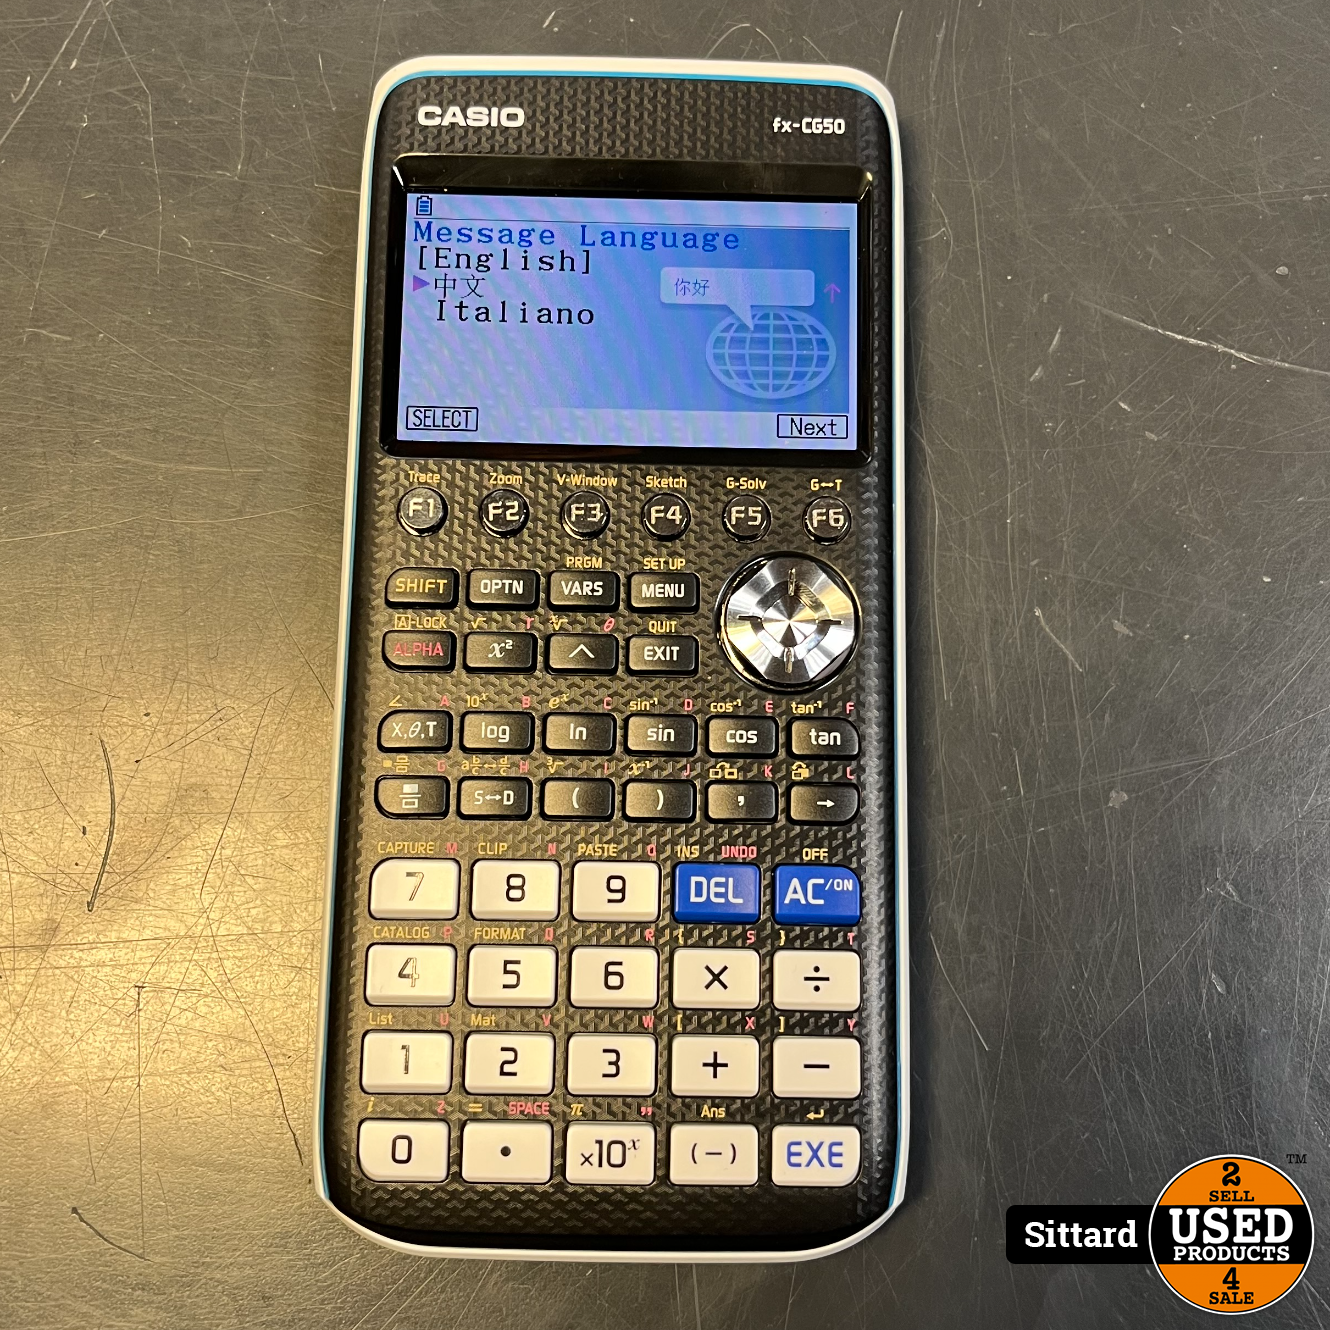 dun bevestigen Nauwkeurig Casio FX-CG50 - Grafische rekenmachine, In nette staat | Nwpr 105,- Euro -  Used Products Sittard